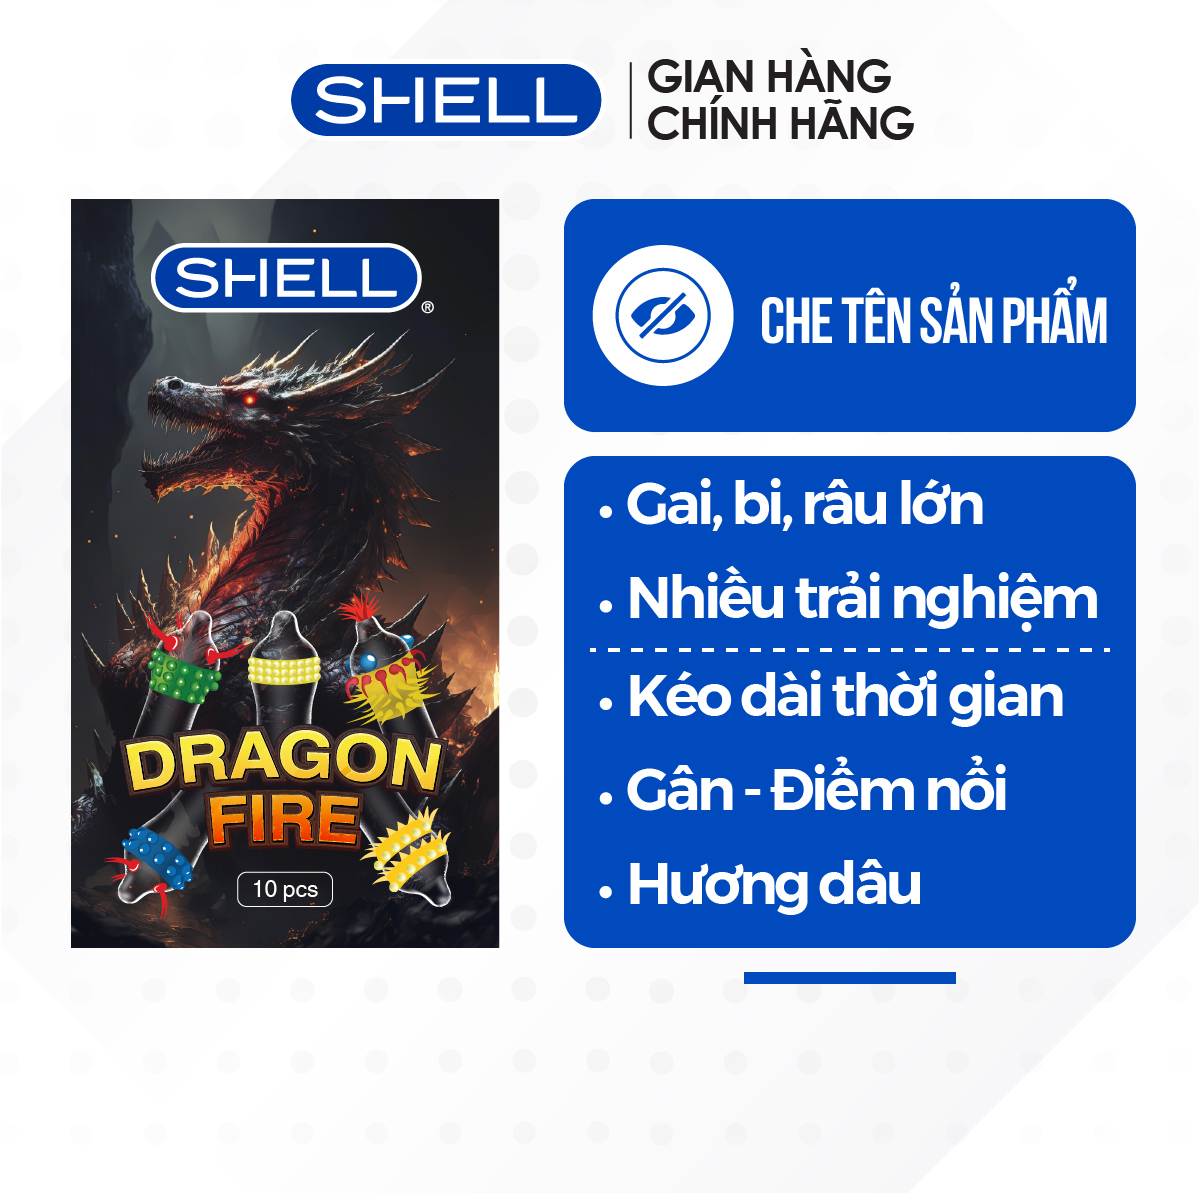 Bao cao su Shell Dragon Fire - Hộp 5 bao gai, bi nổi lớn + 5 bao Shell Performax (Hộp 10 cái) | SHELL CHÍNH HÃNG